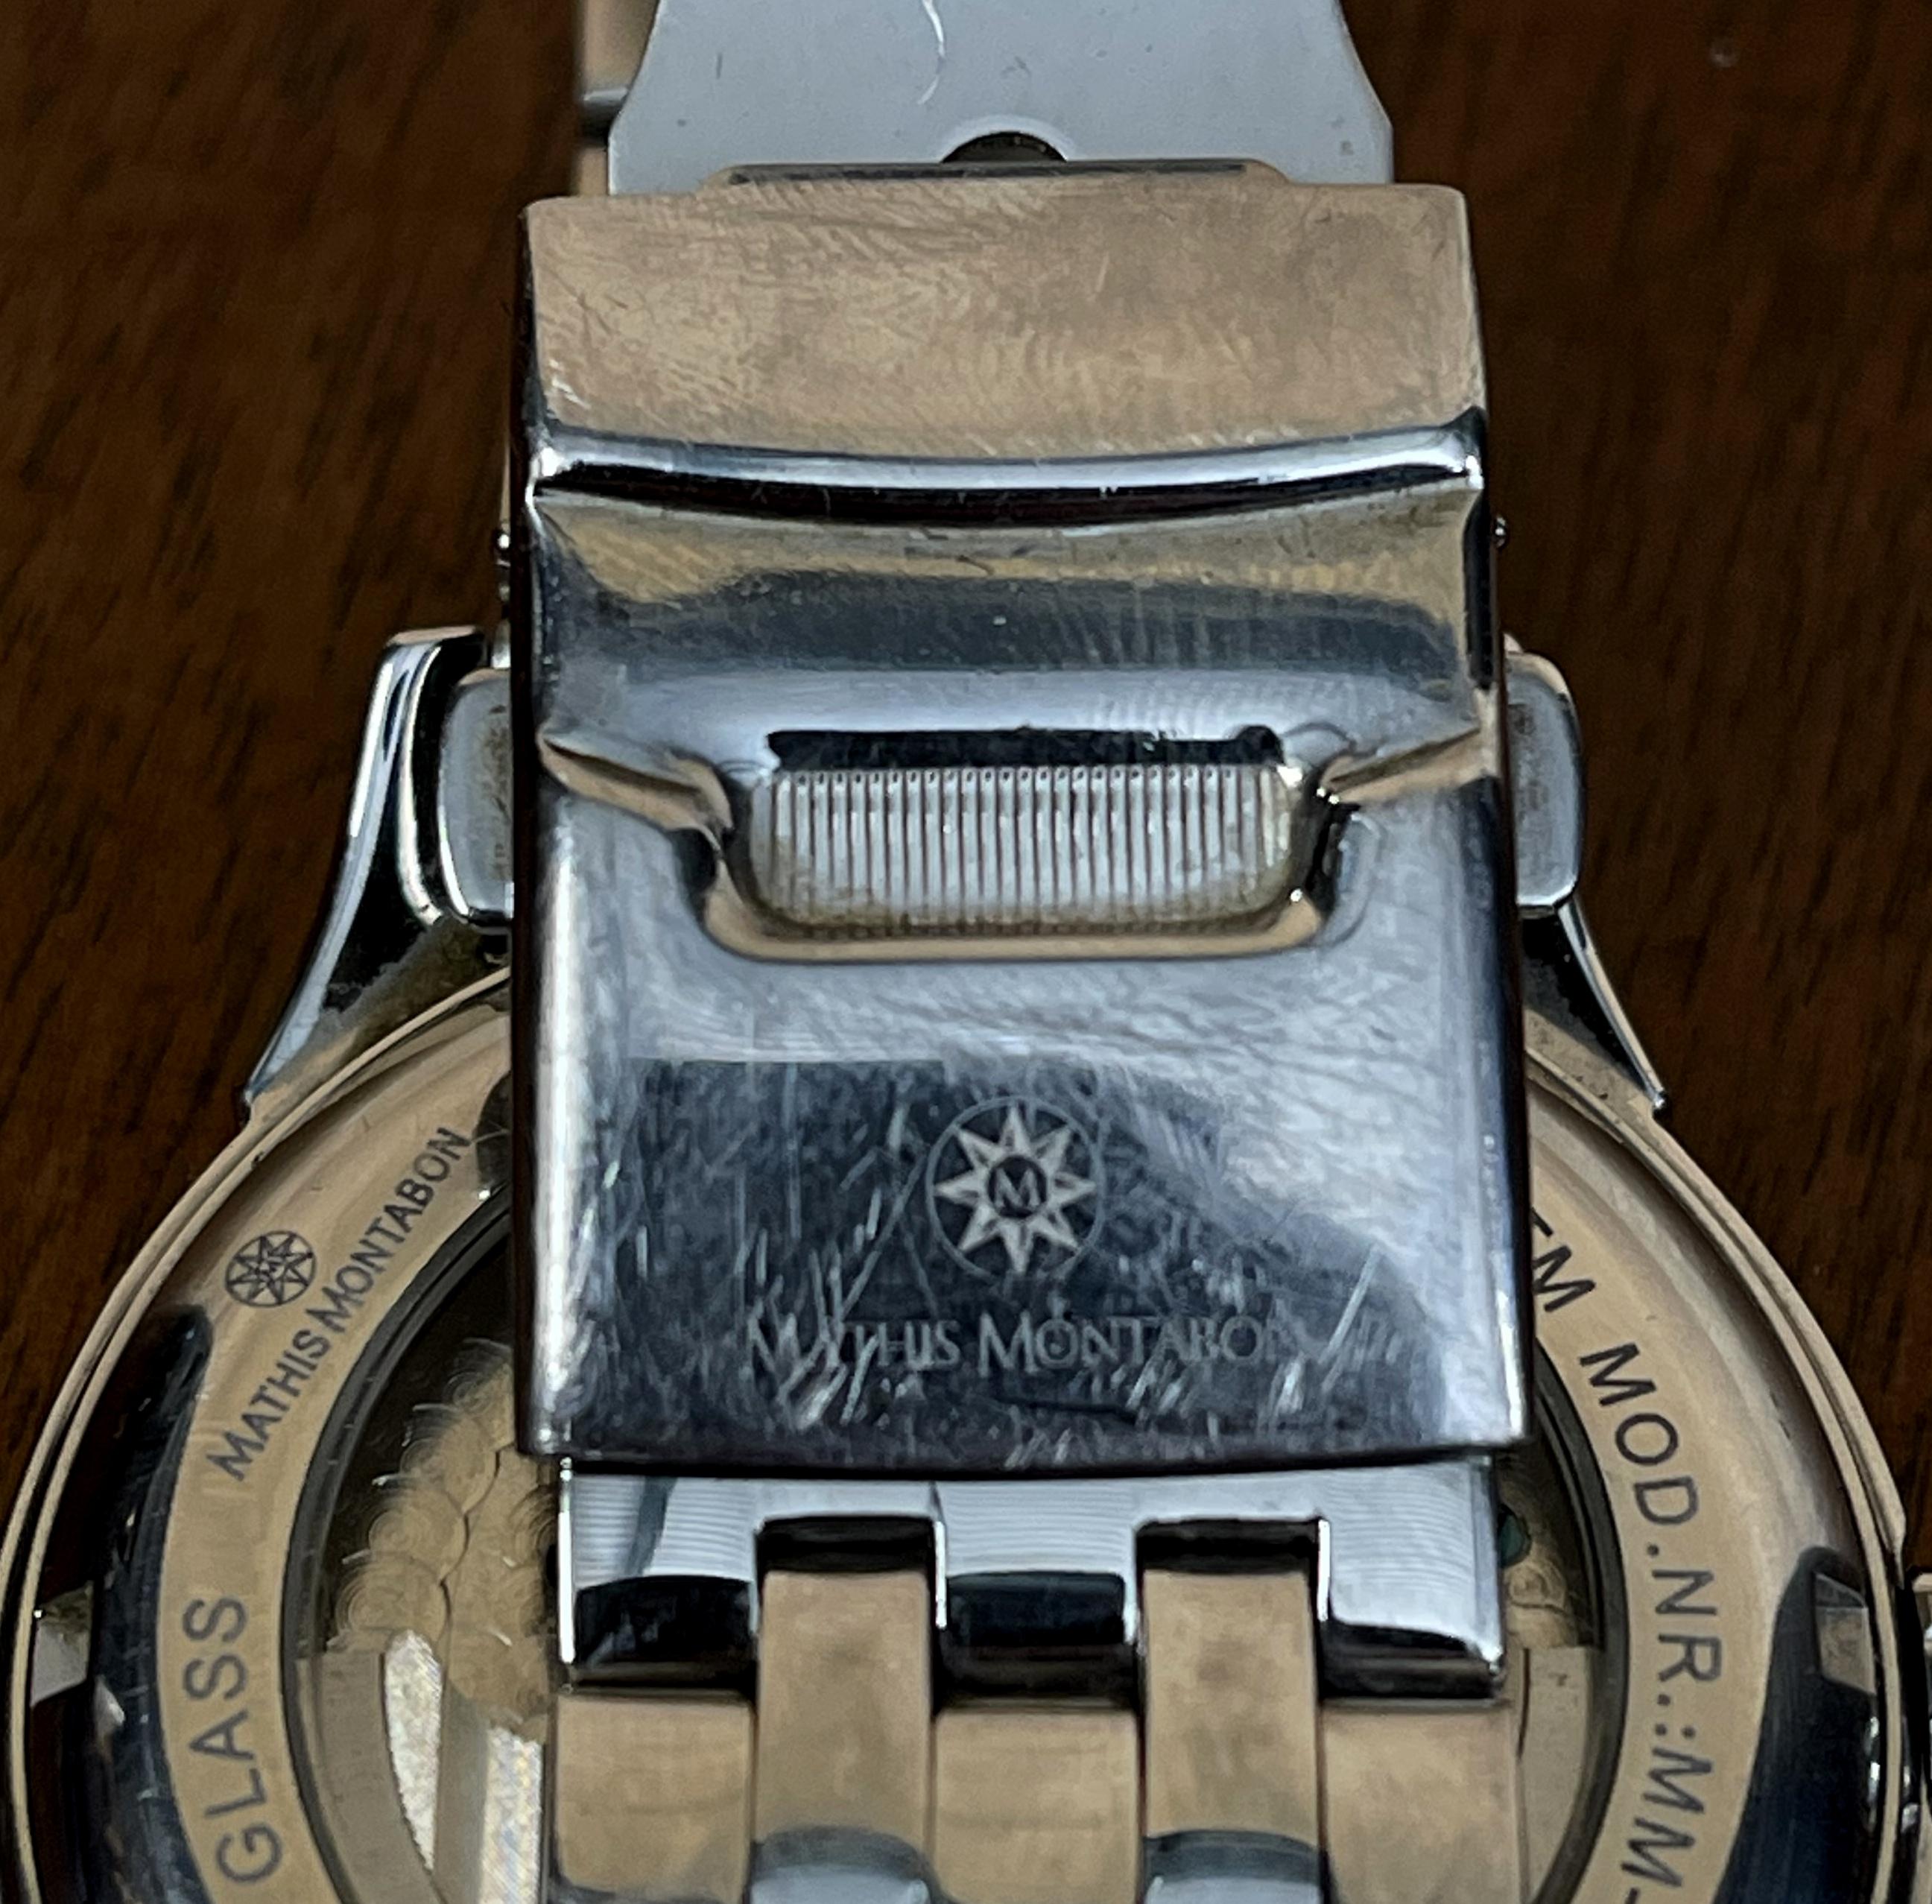 Electric Blue Mathis Montabon Chronograph Mens Wristwatch  For Sale 7